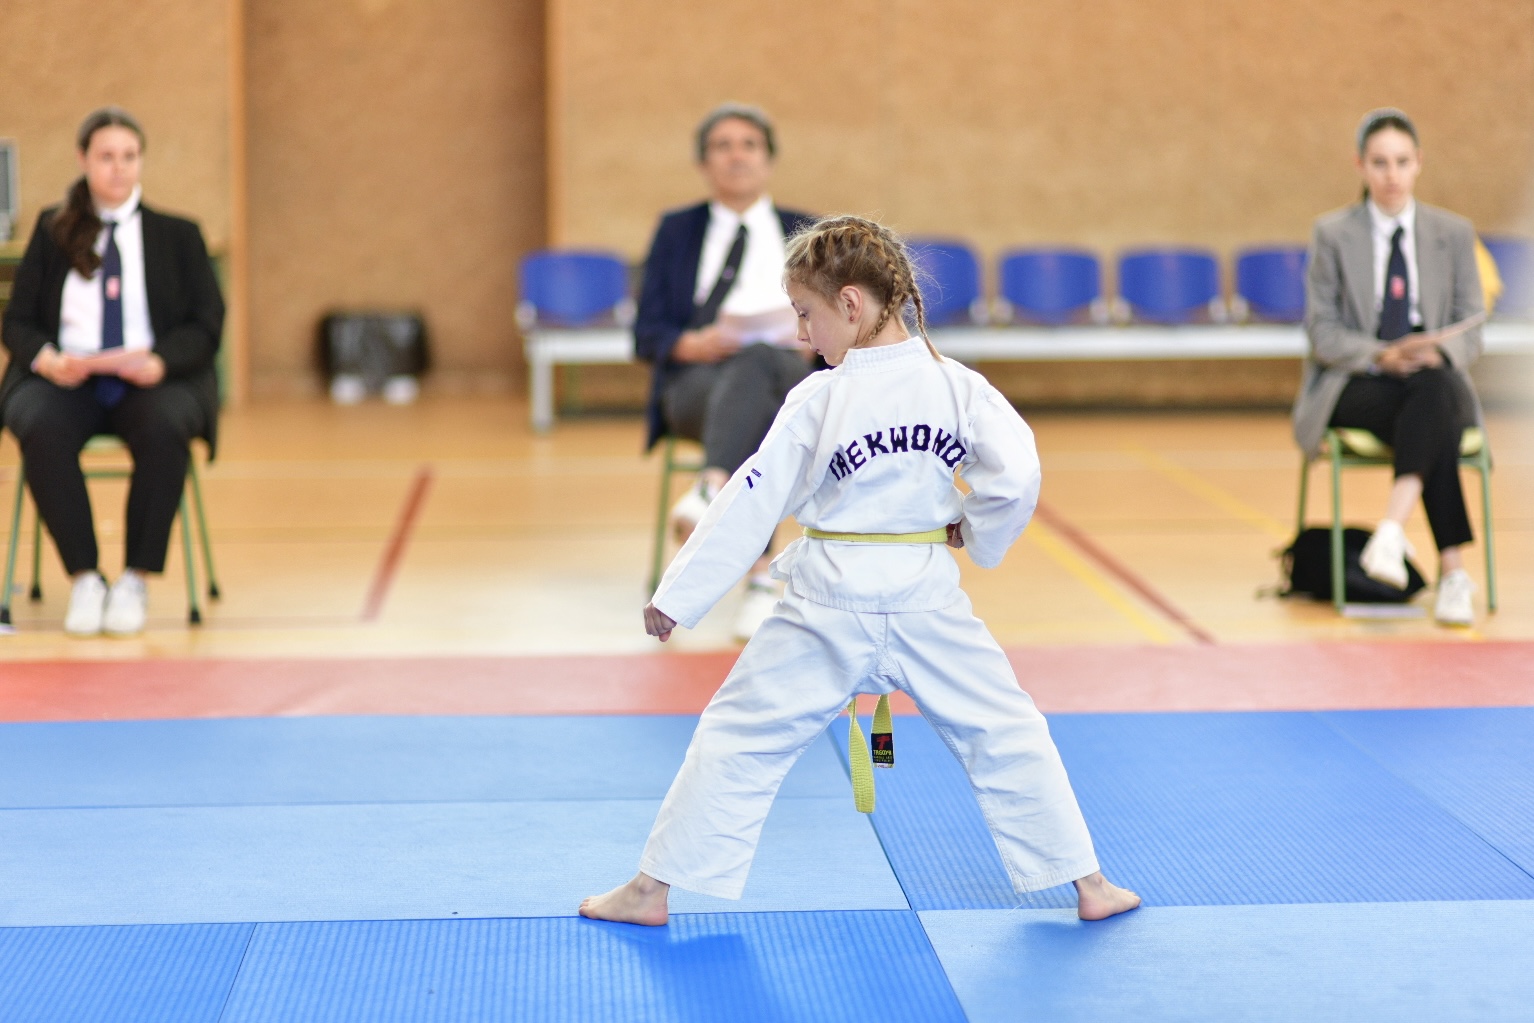 Imagen del campeonato de taekwondo.